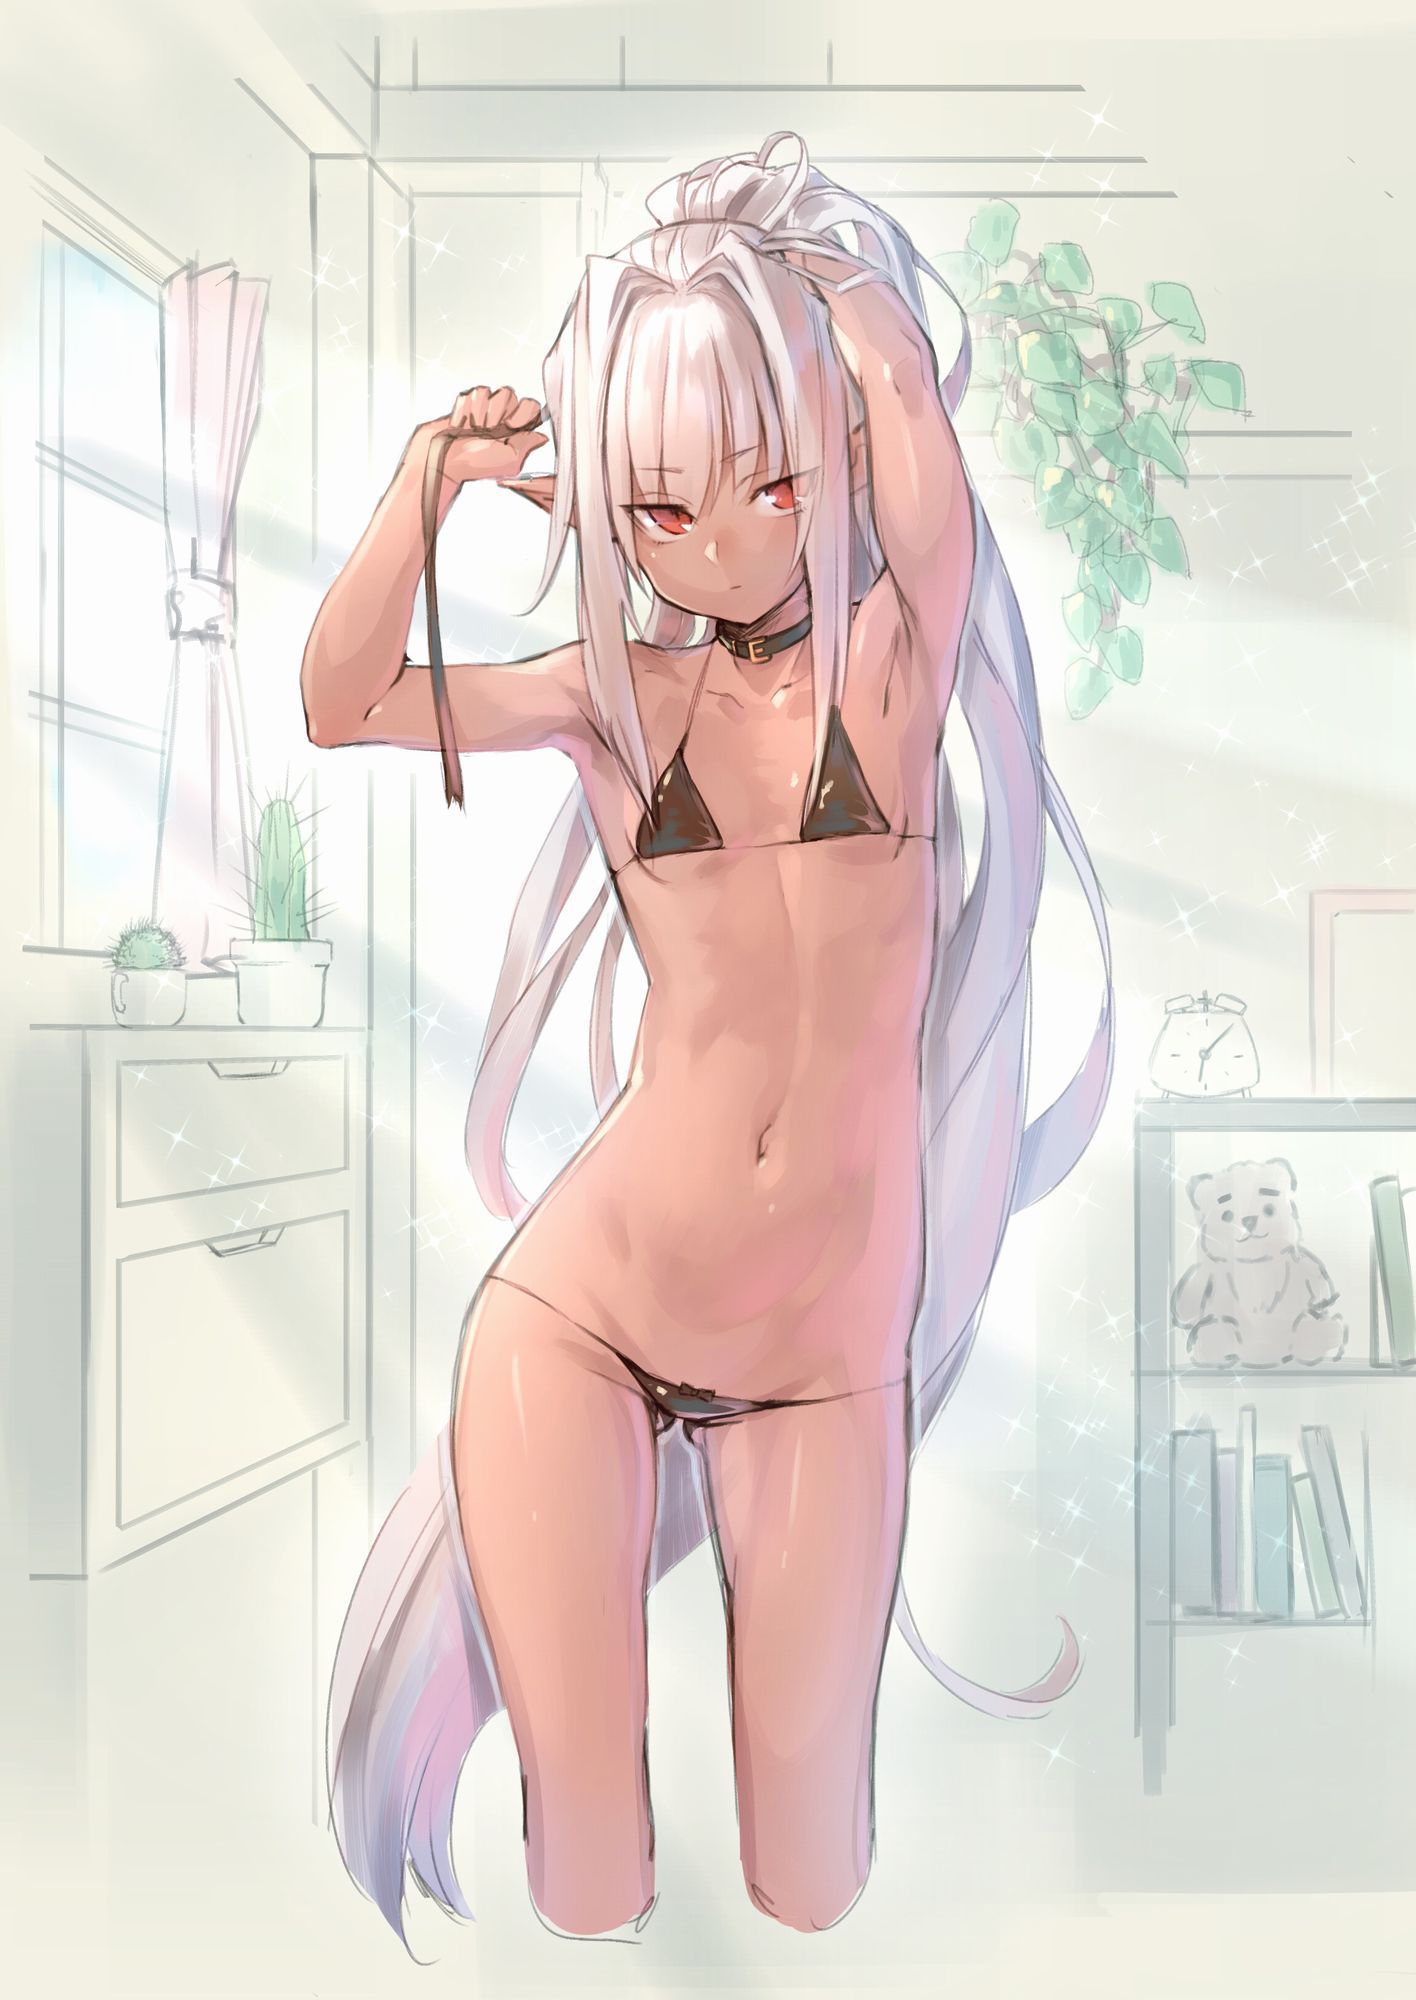 [the second, ZIP] please give me the beautiful girl image of the low leg underwear bikini! 32